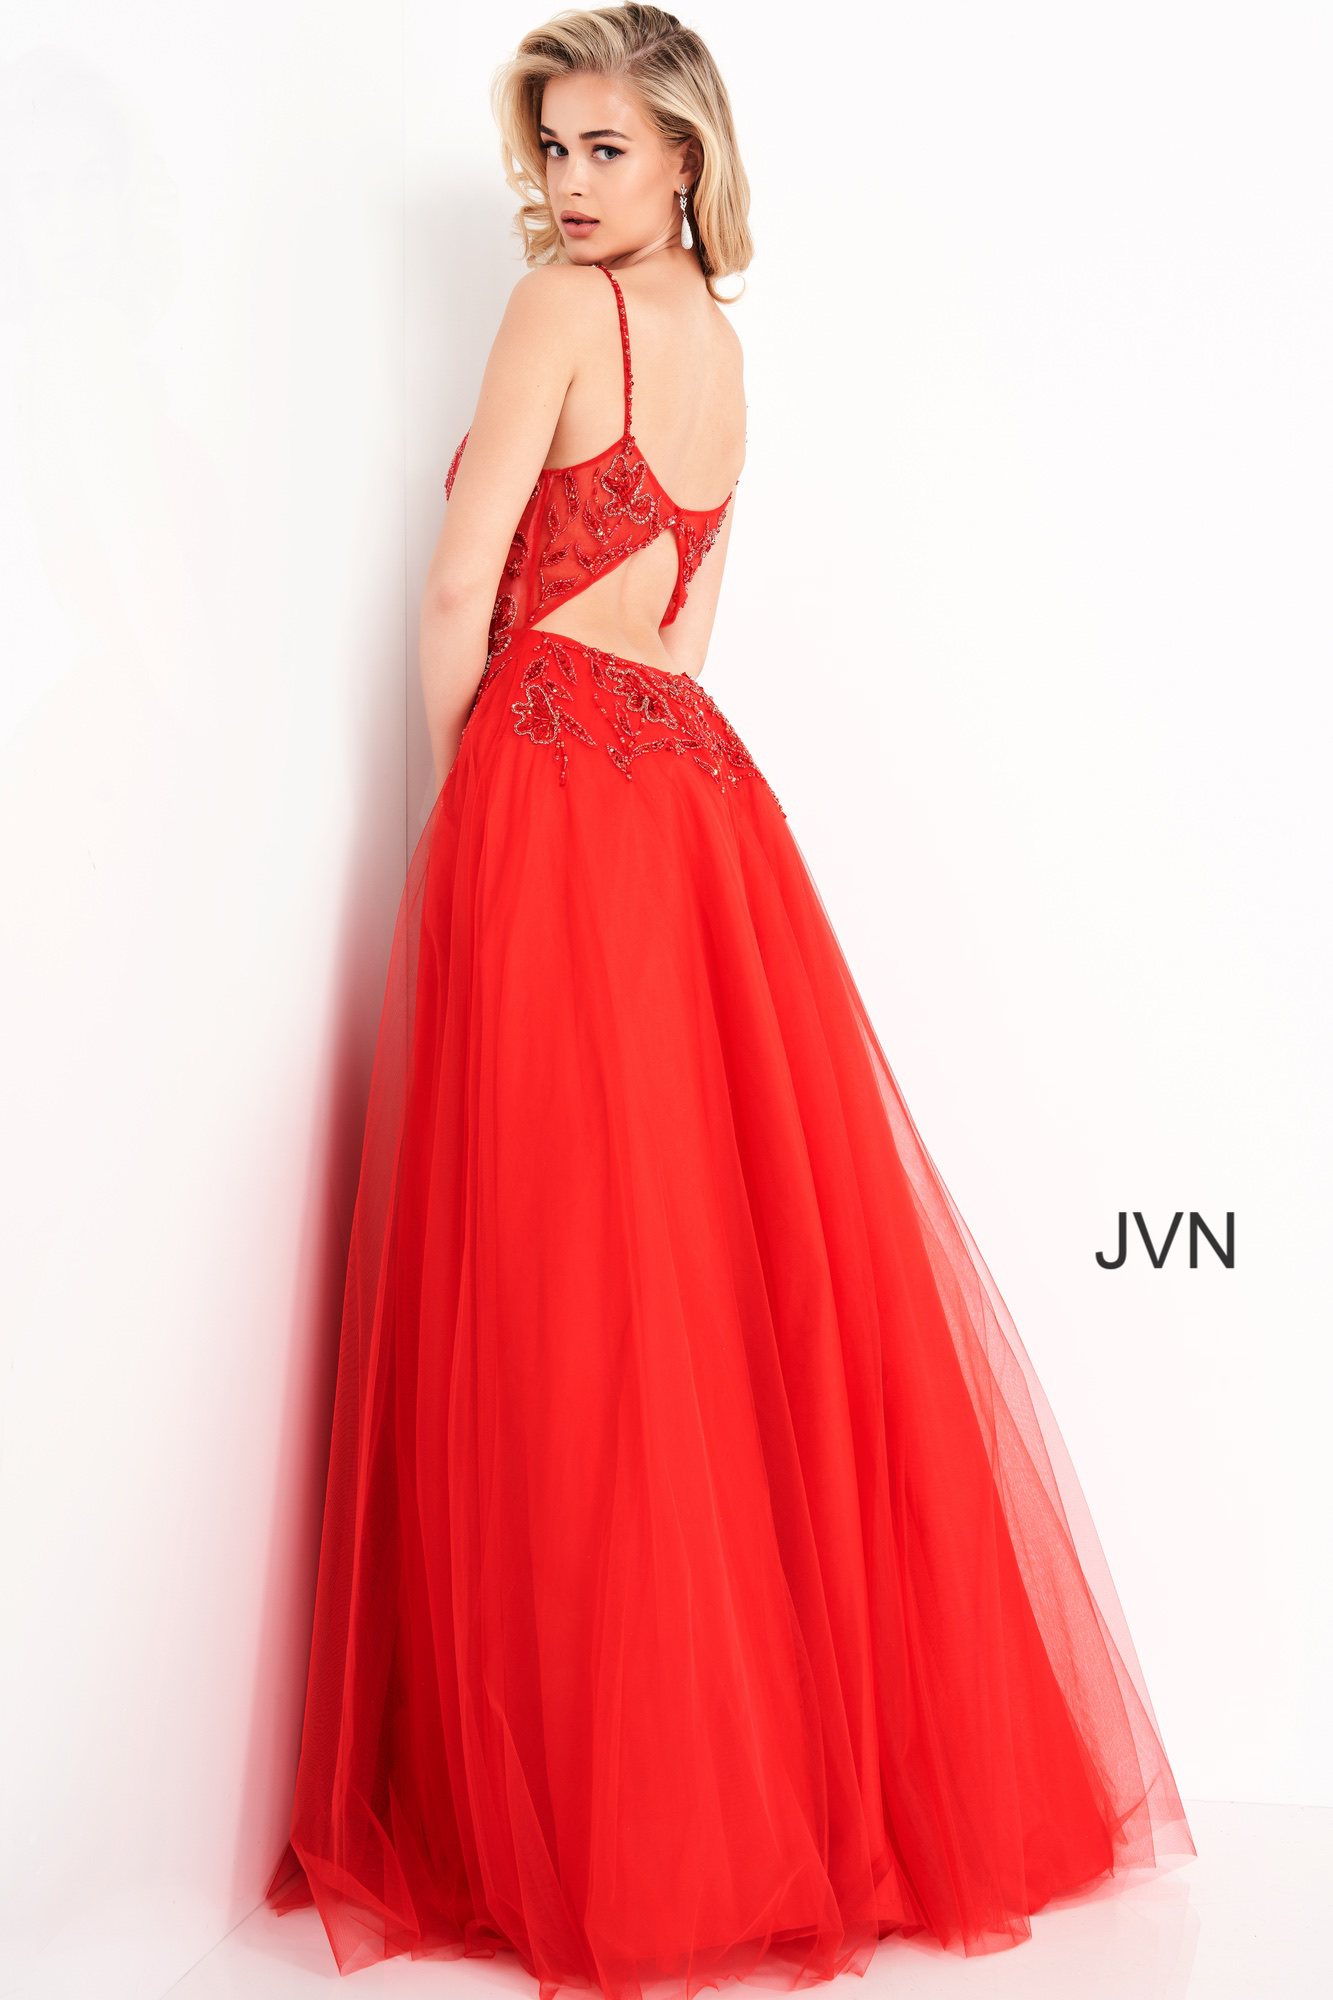 JVN4396 Dress | Embellished Bodice Tulle Skirt Prom Gown